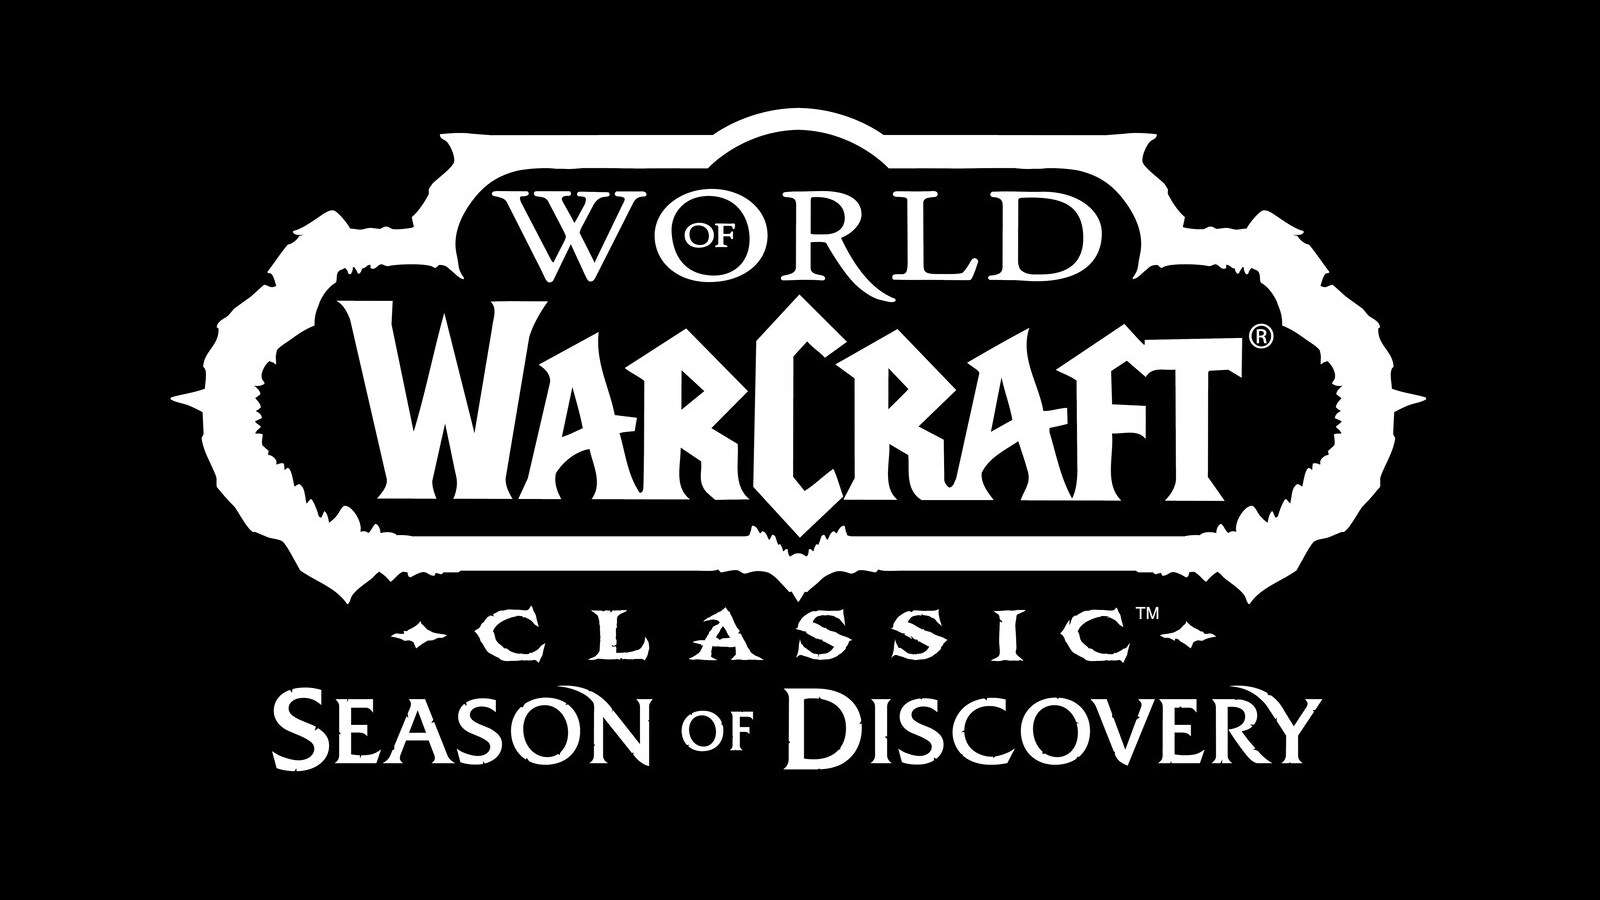 The Season of Discovery WoW logo